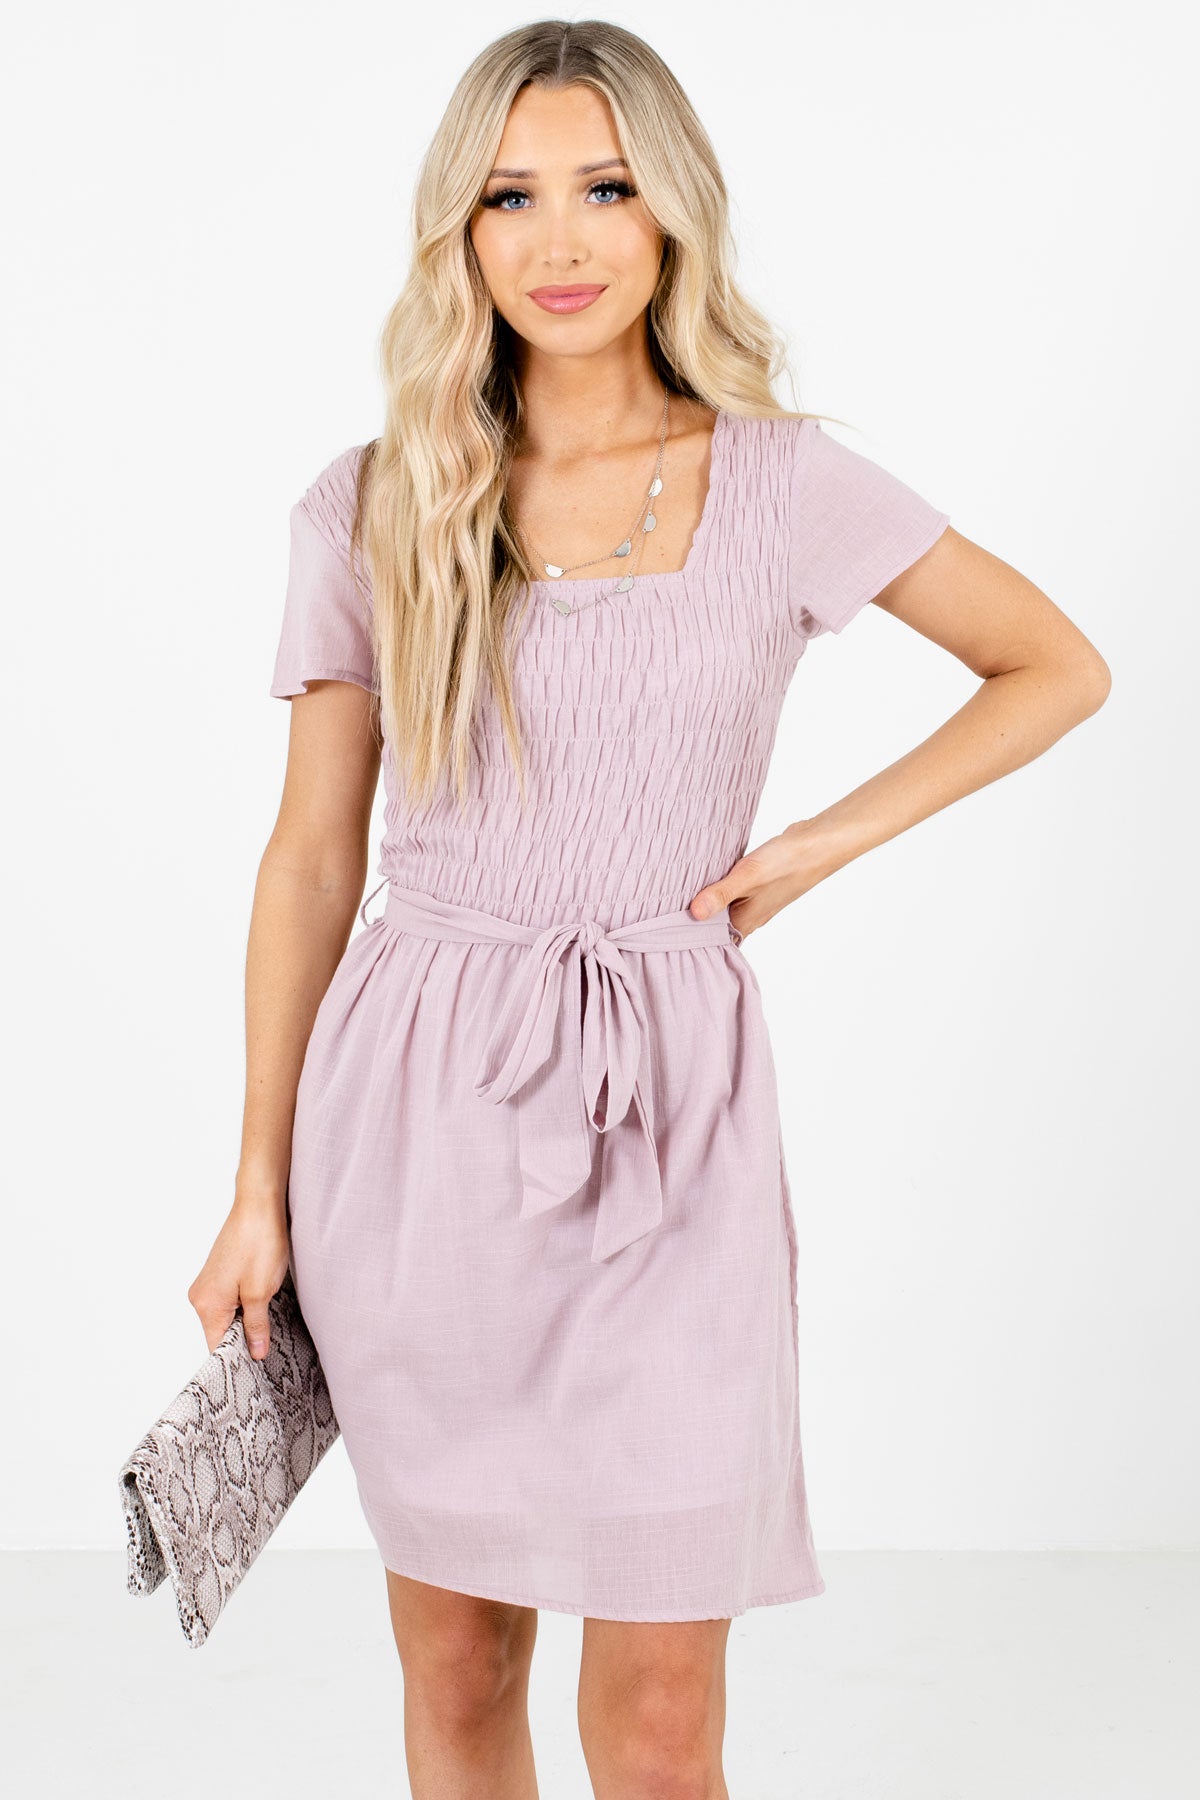 Lavender Purple Smocked Bodice Boutique Mini Dresses for Women